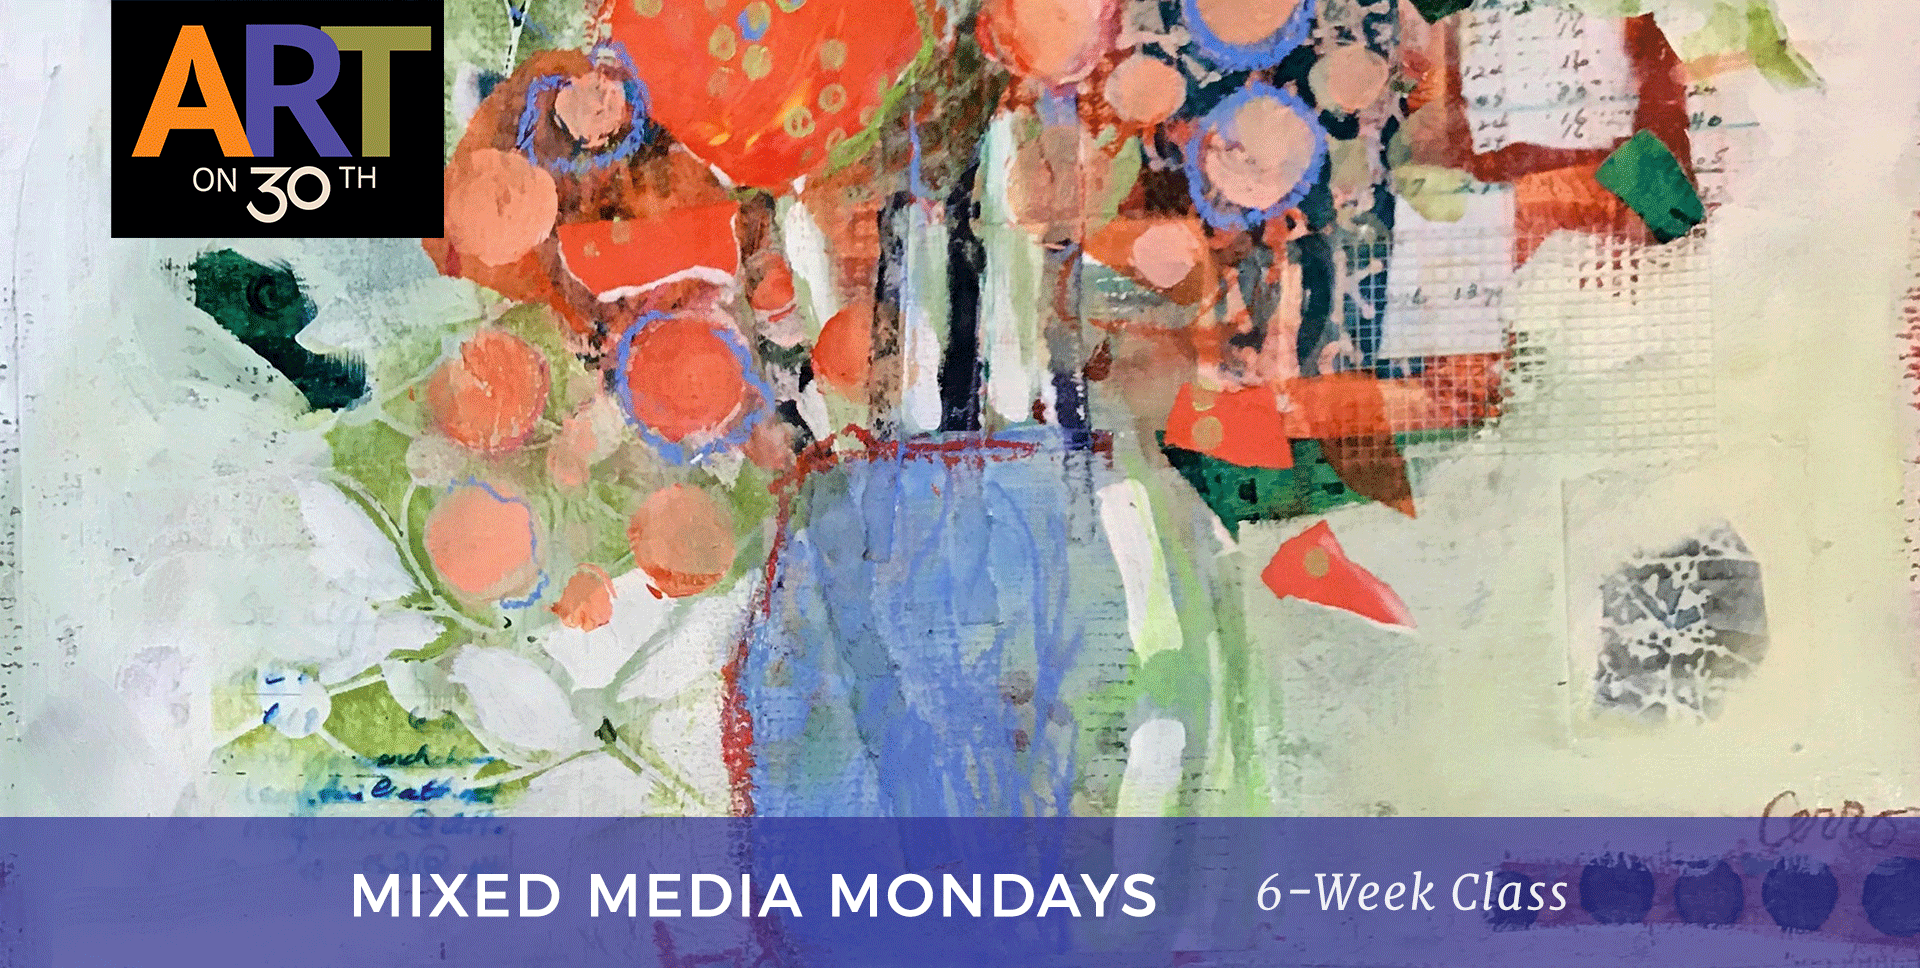 MON - Mixed Media Mondays with Denise Cerro